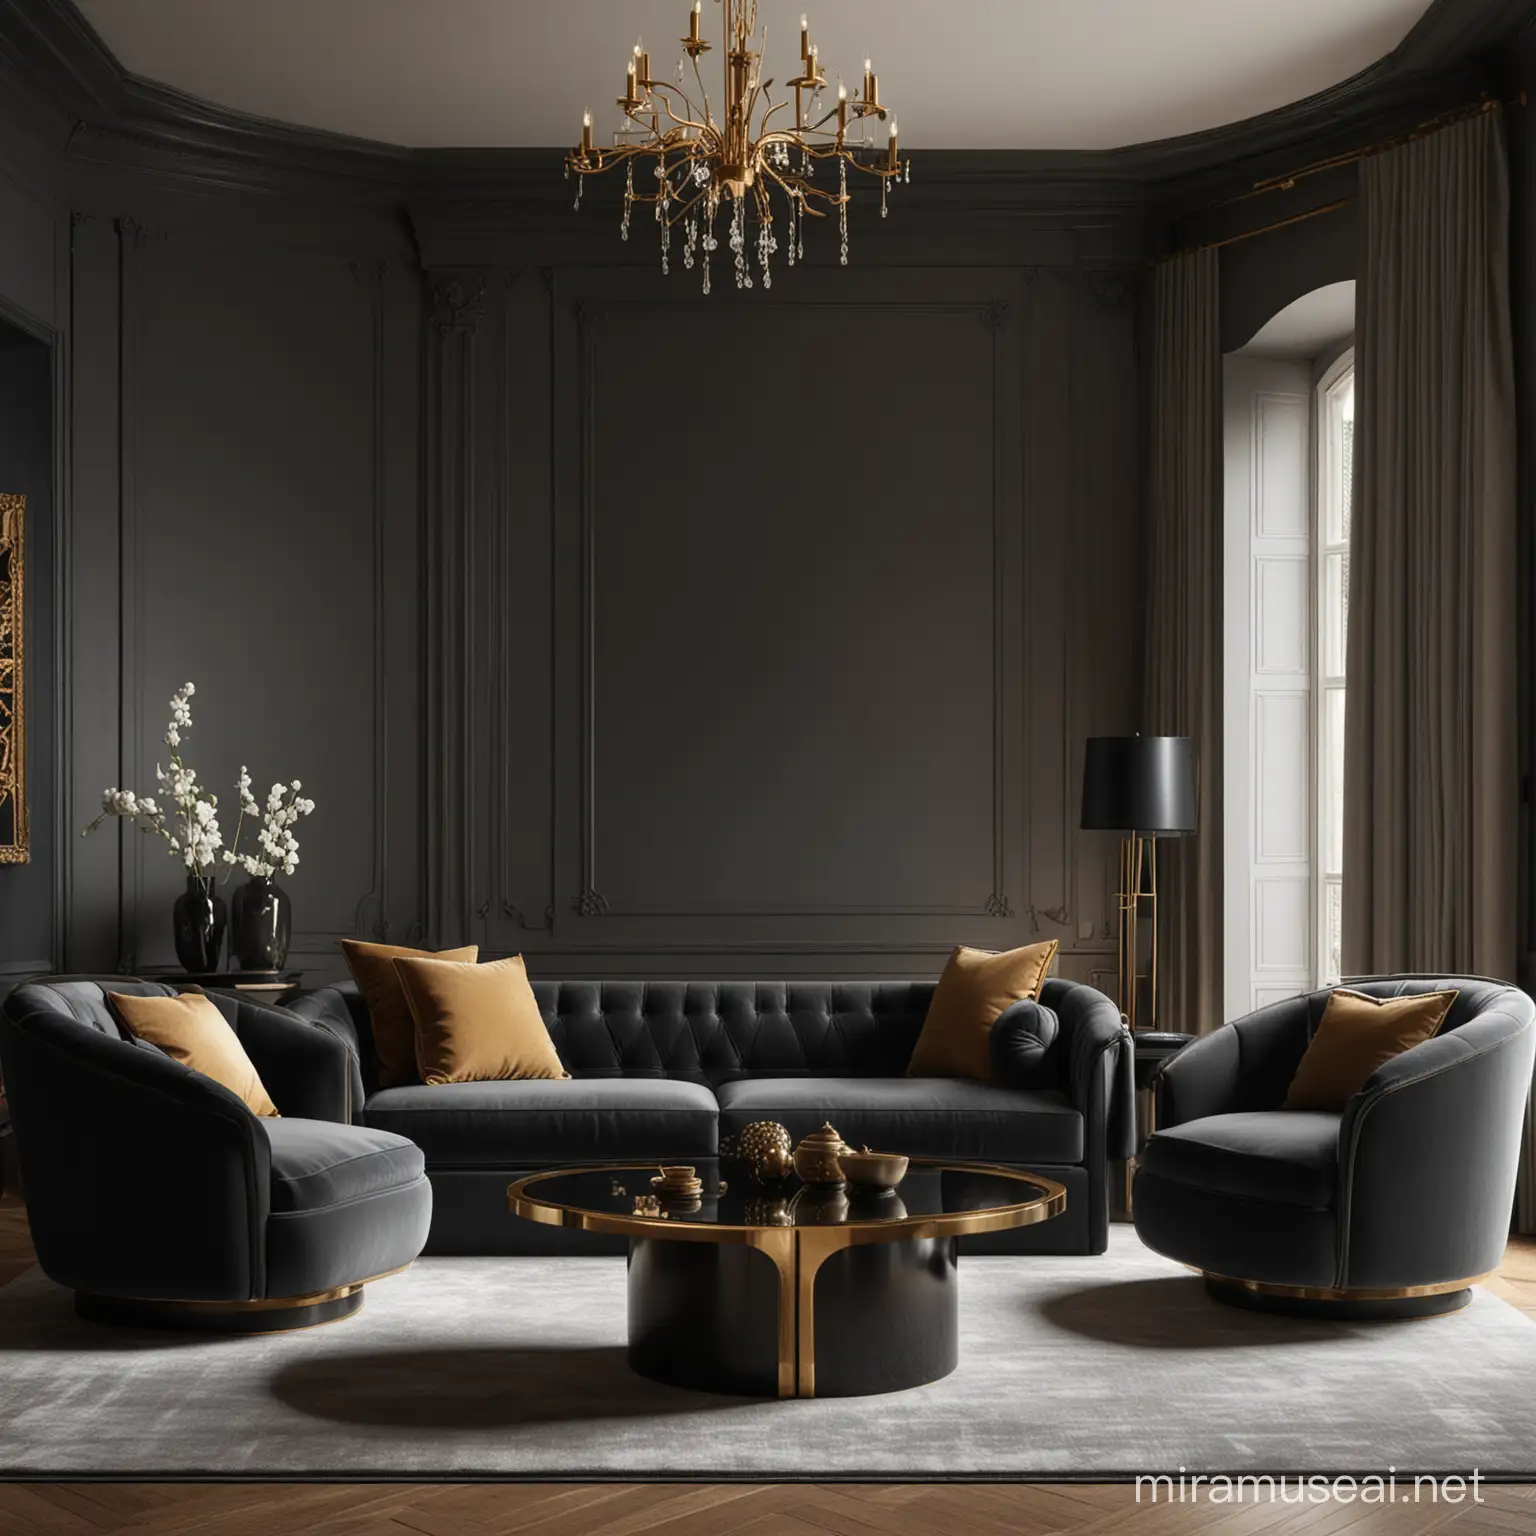 Elegant Sofa Design in a Luxurious Black and Gold Interior